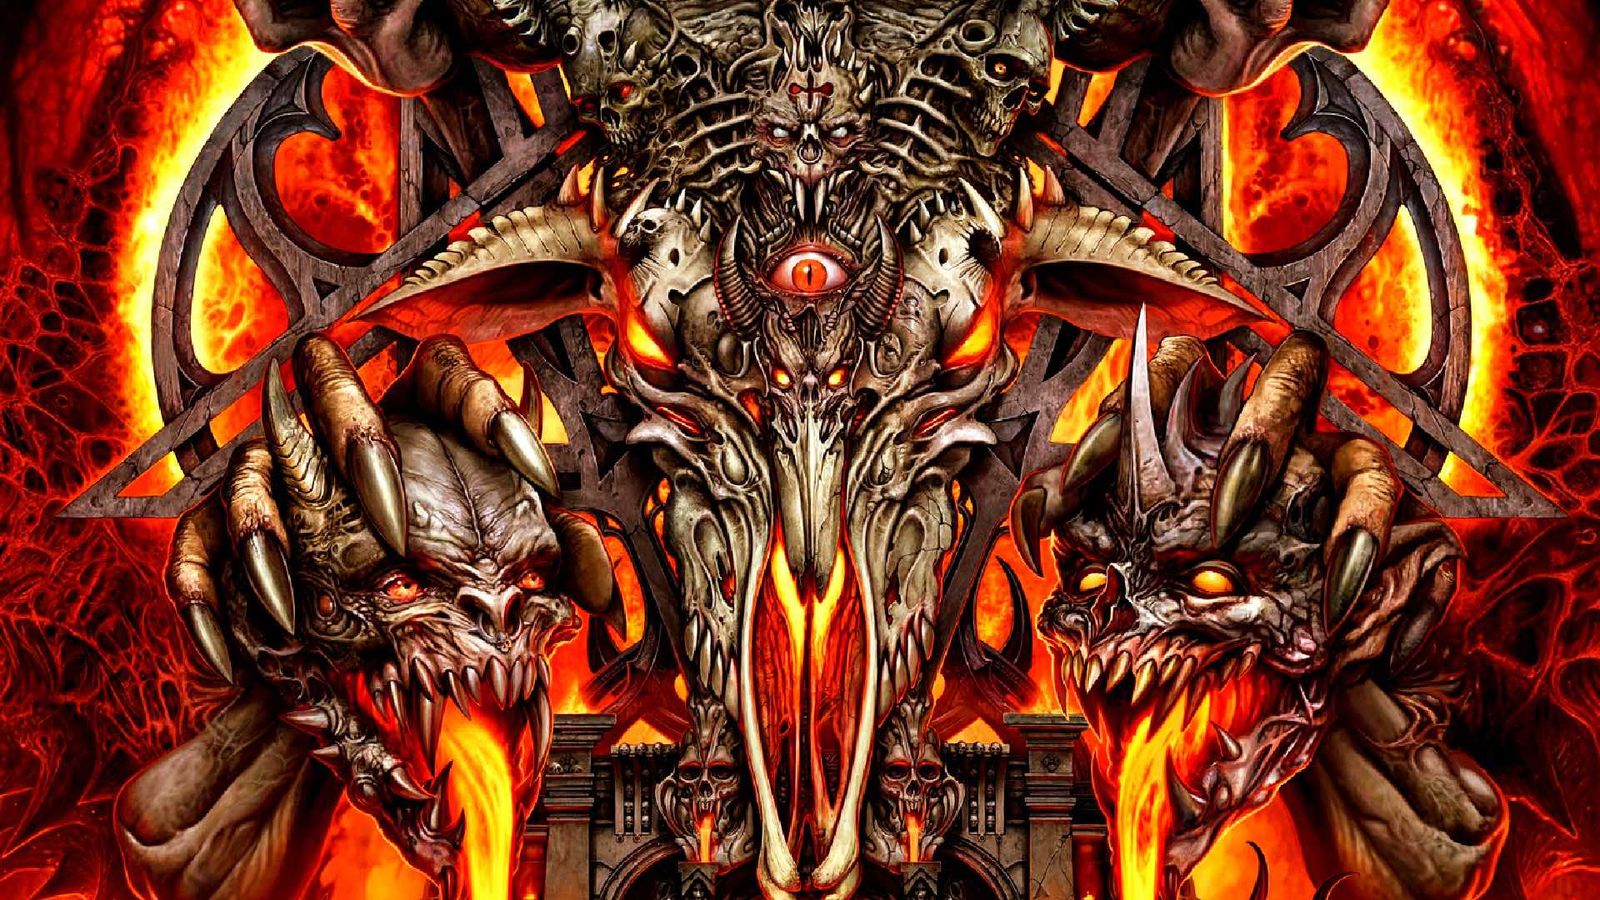 Sigil 2, a free Doom expansion, keyart showing a gargantuan demon with fire spirit hands staring at the player 